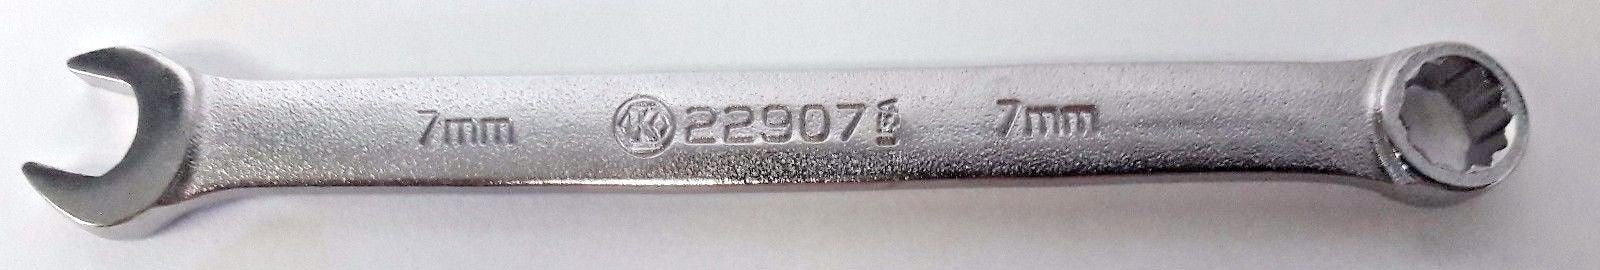 Kobalt 22907 7mm Combo Wrench 12 Point USA